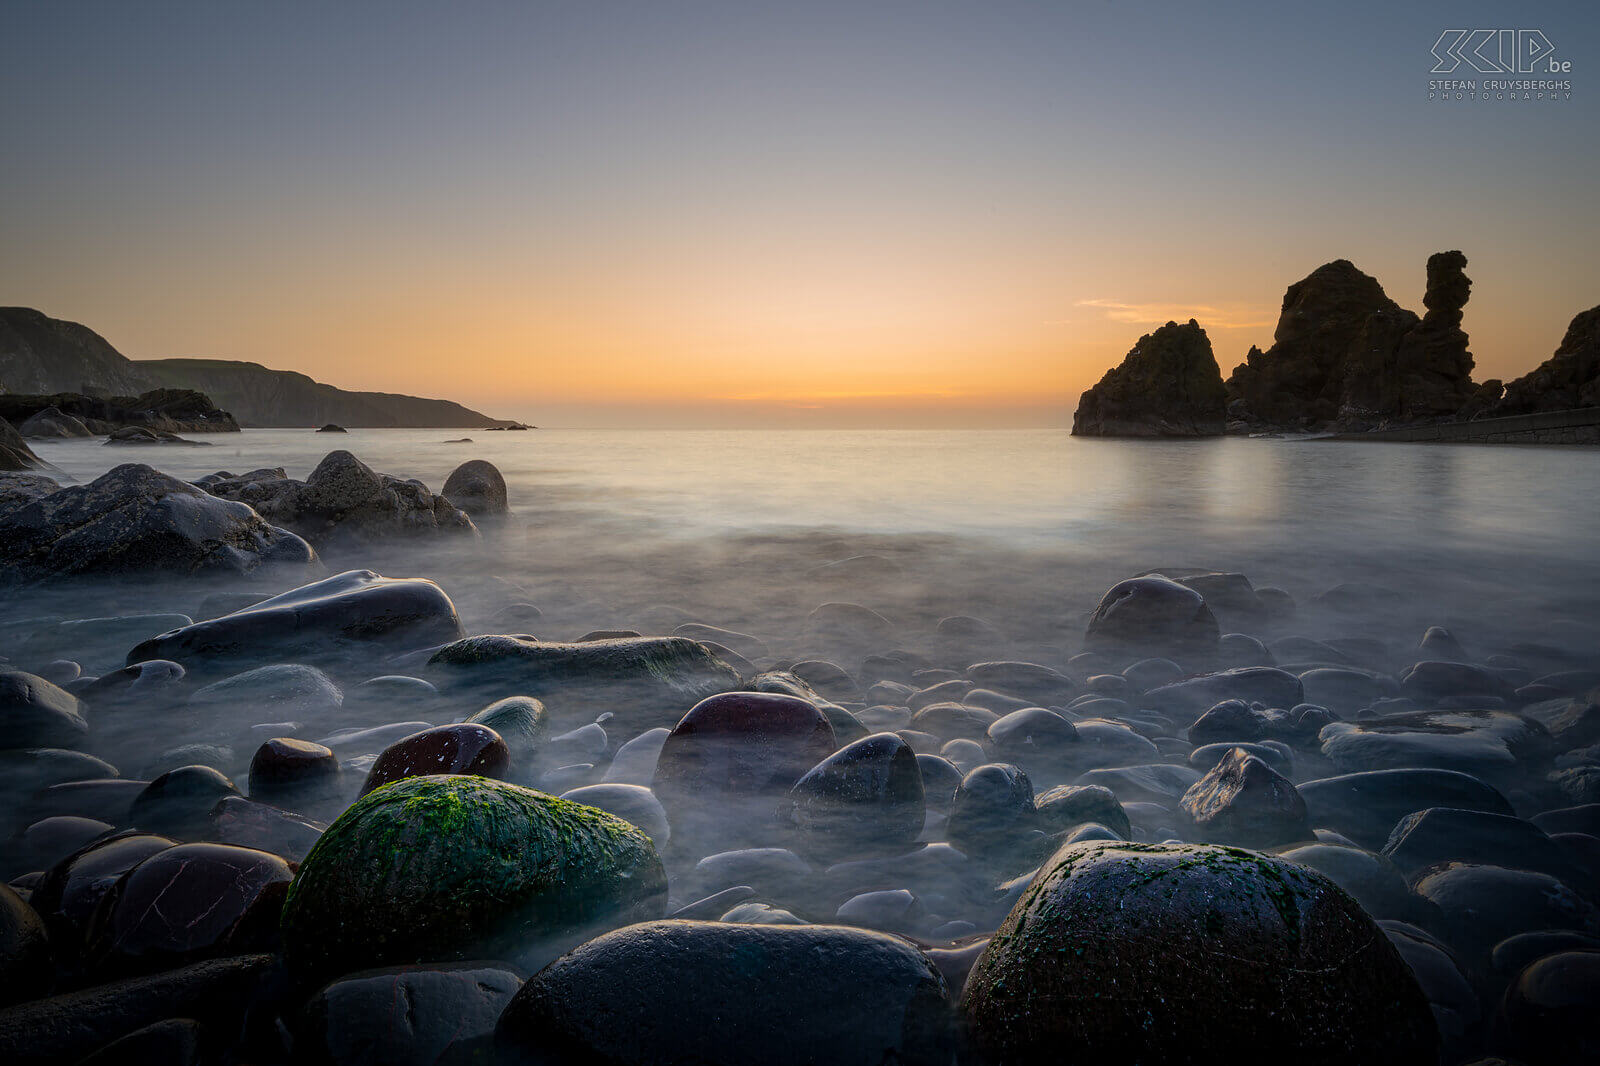 St Abbs Head - Sunset Sunset on the beautiful coasts of St Abbs on the Scottish east coast. Stefan Cruysberghs